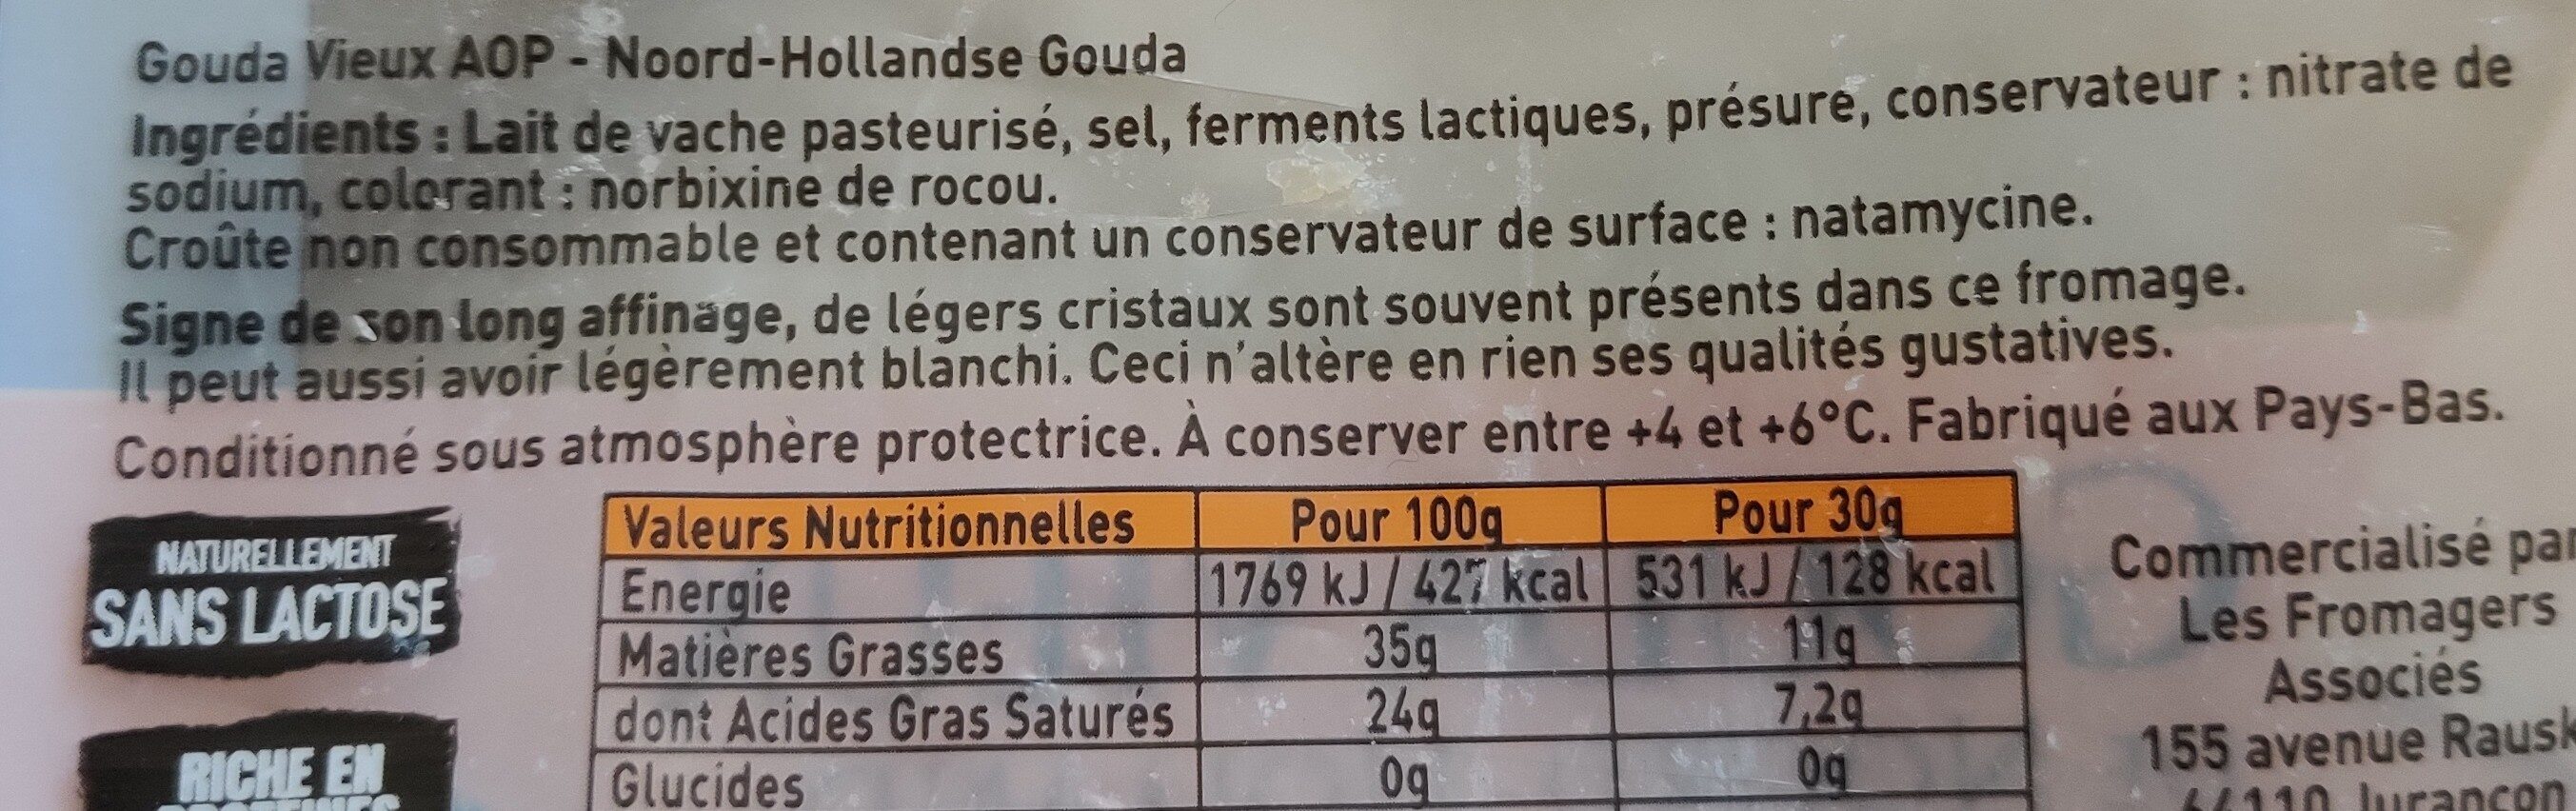 Gouda vieux - Ingredienser - fr